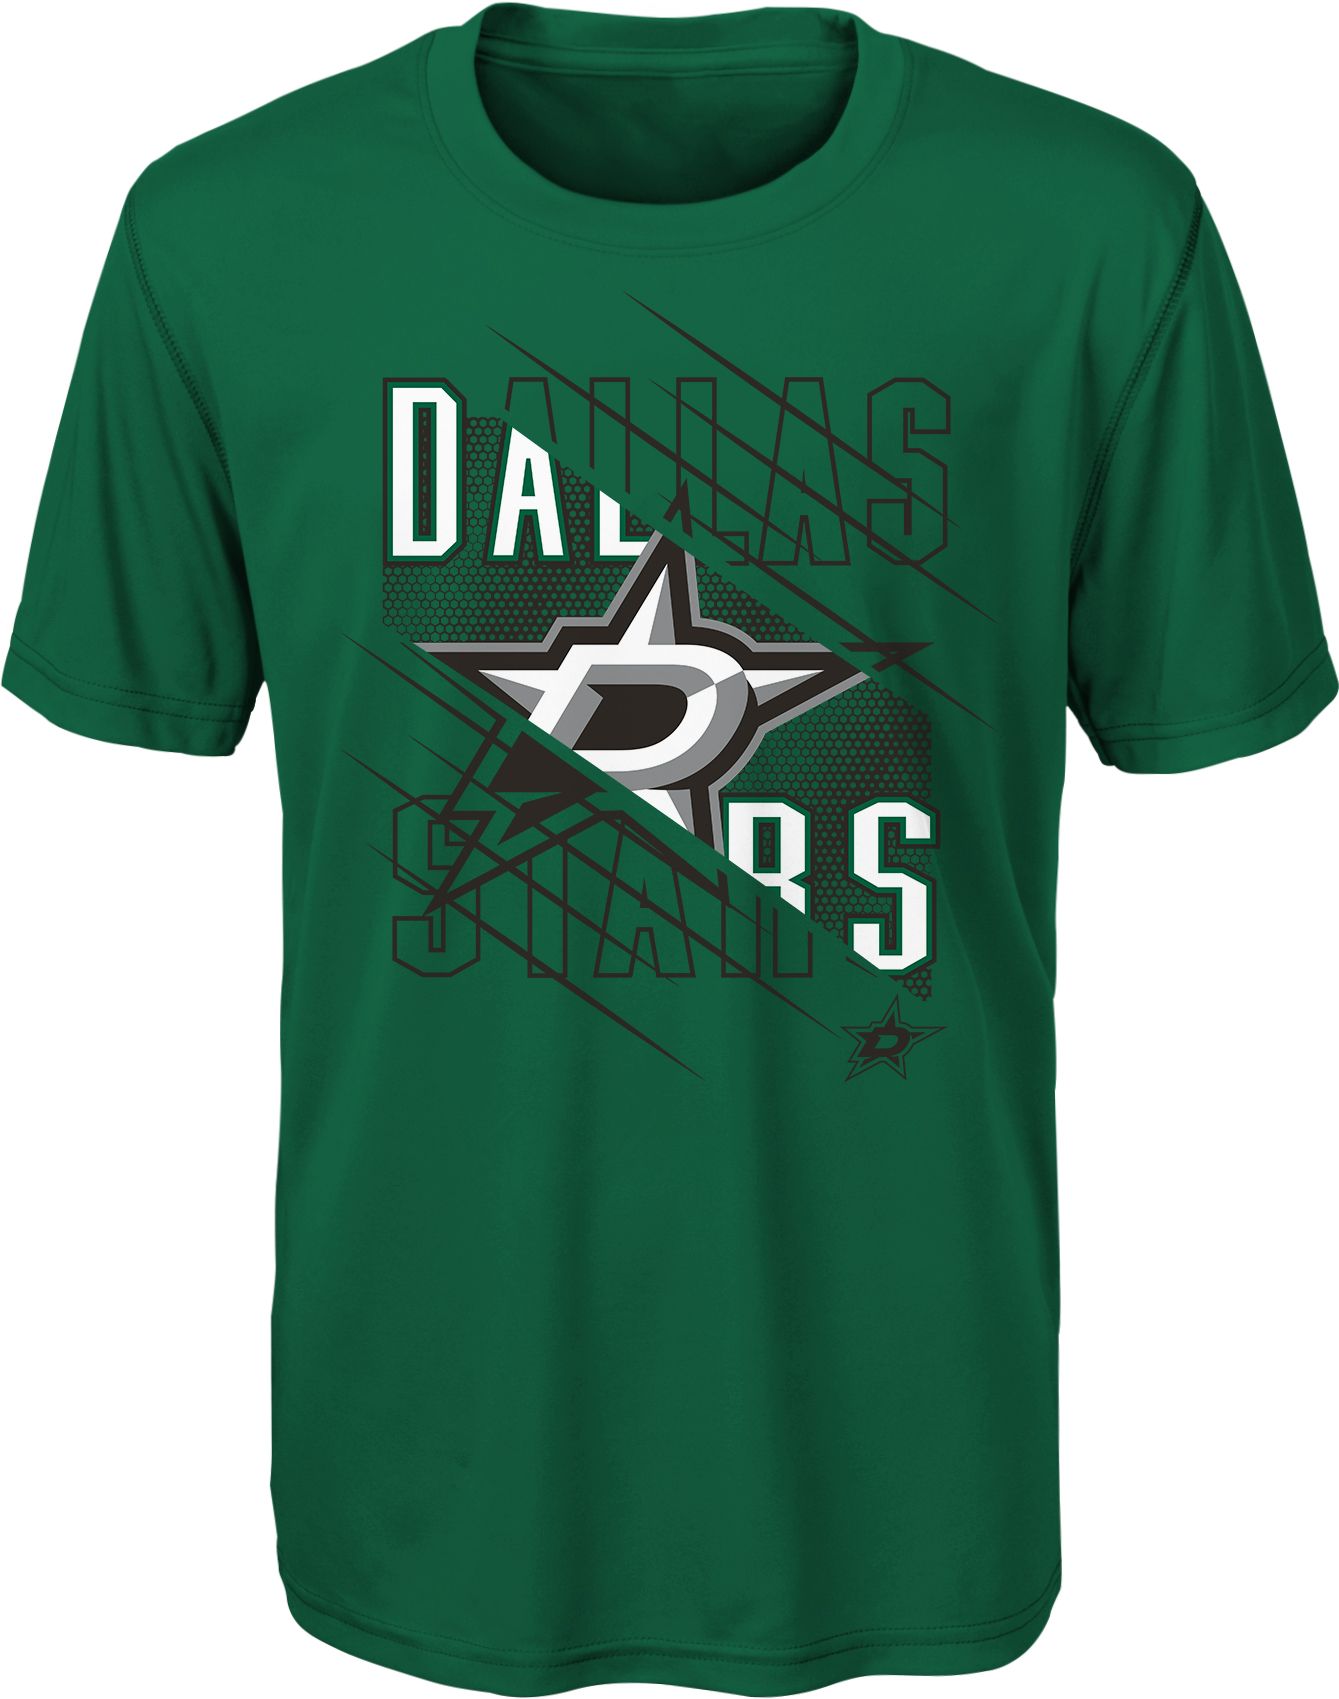 dallas stars hockey t shirt